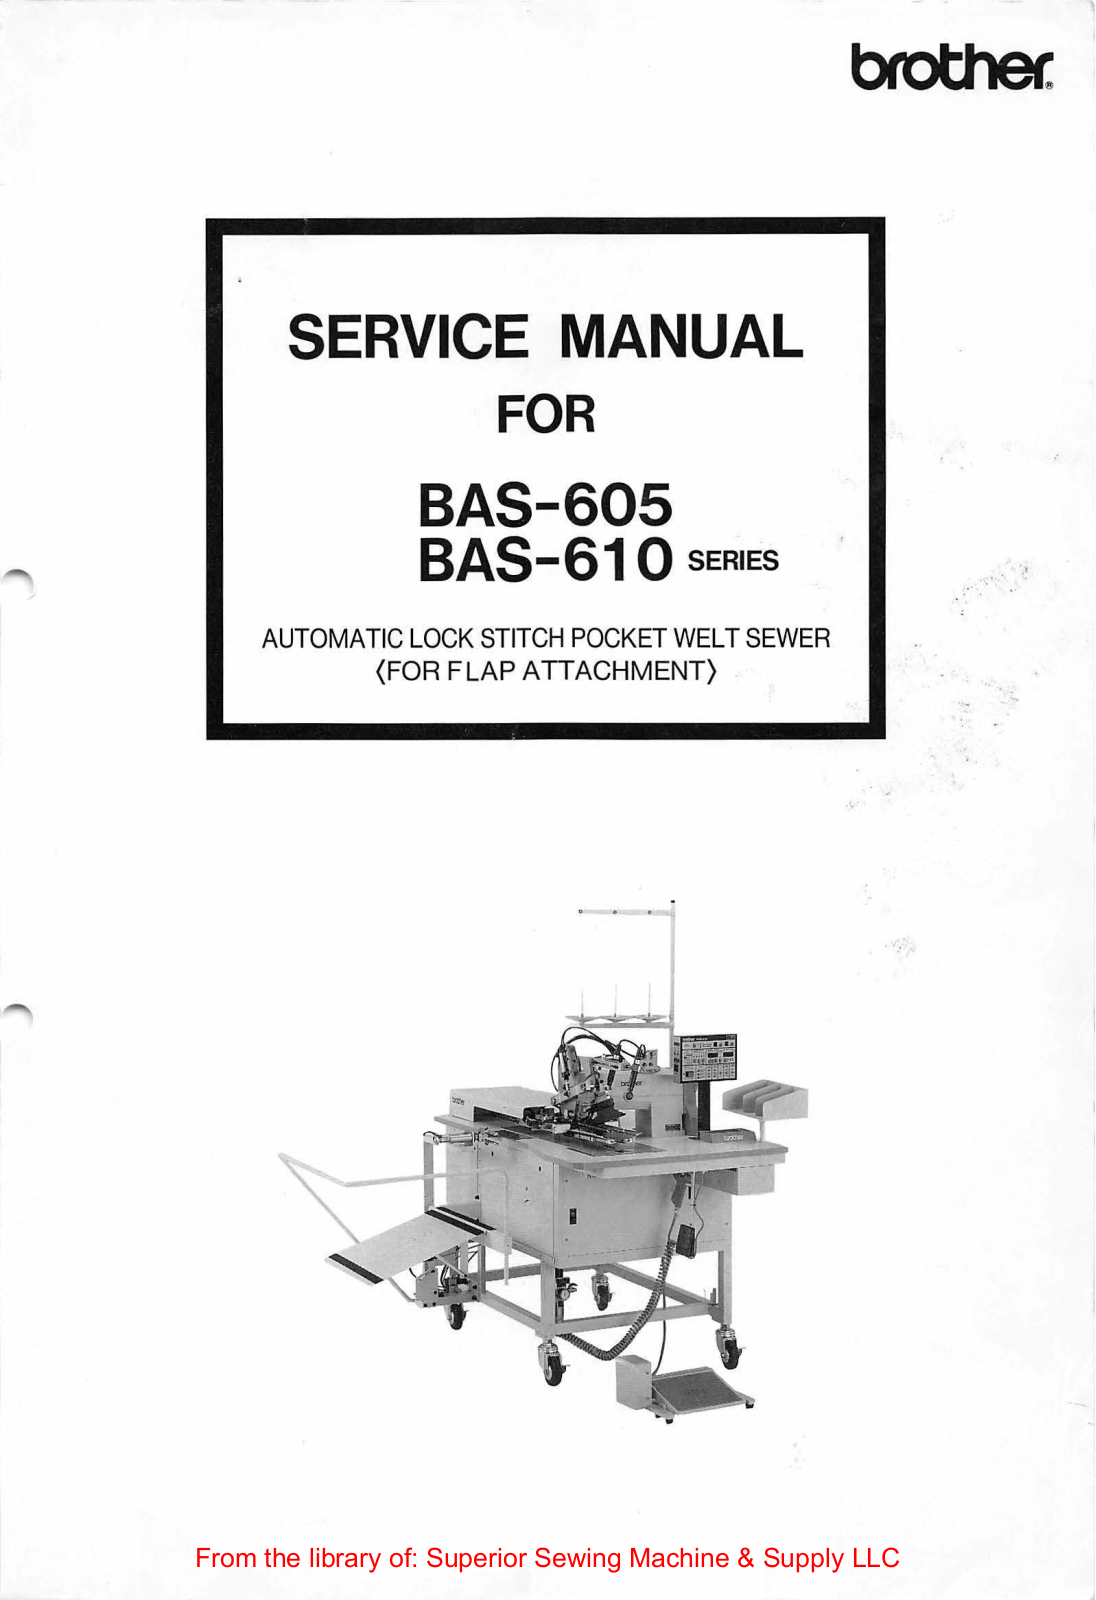 Brother BAS-605, BAS-610 Service Manual